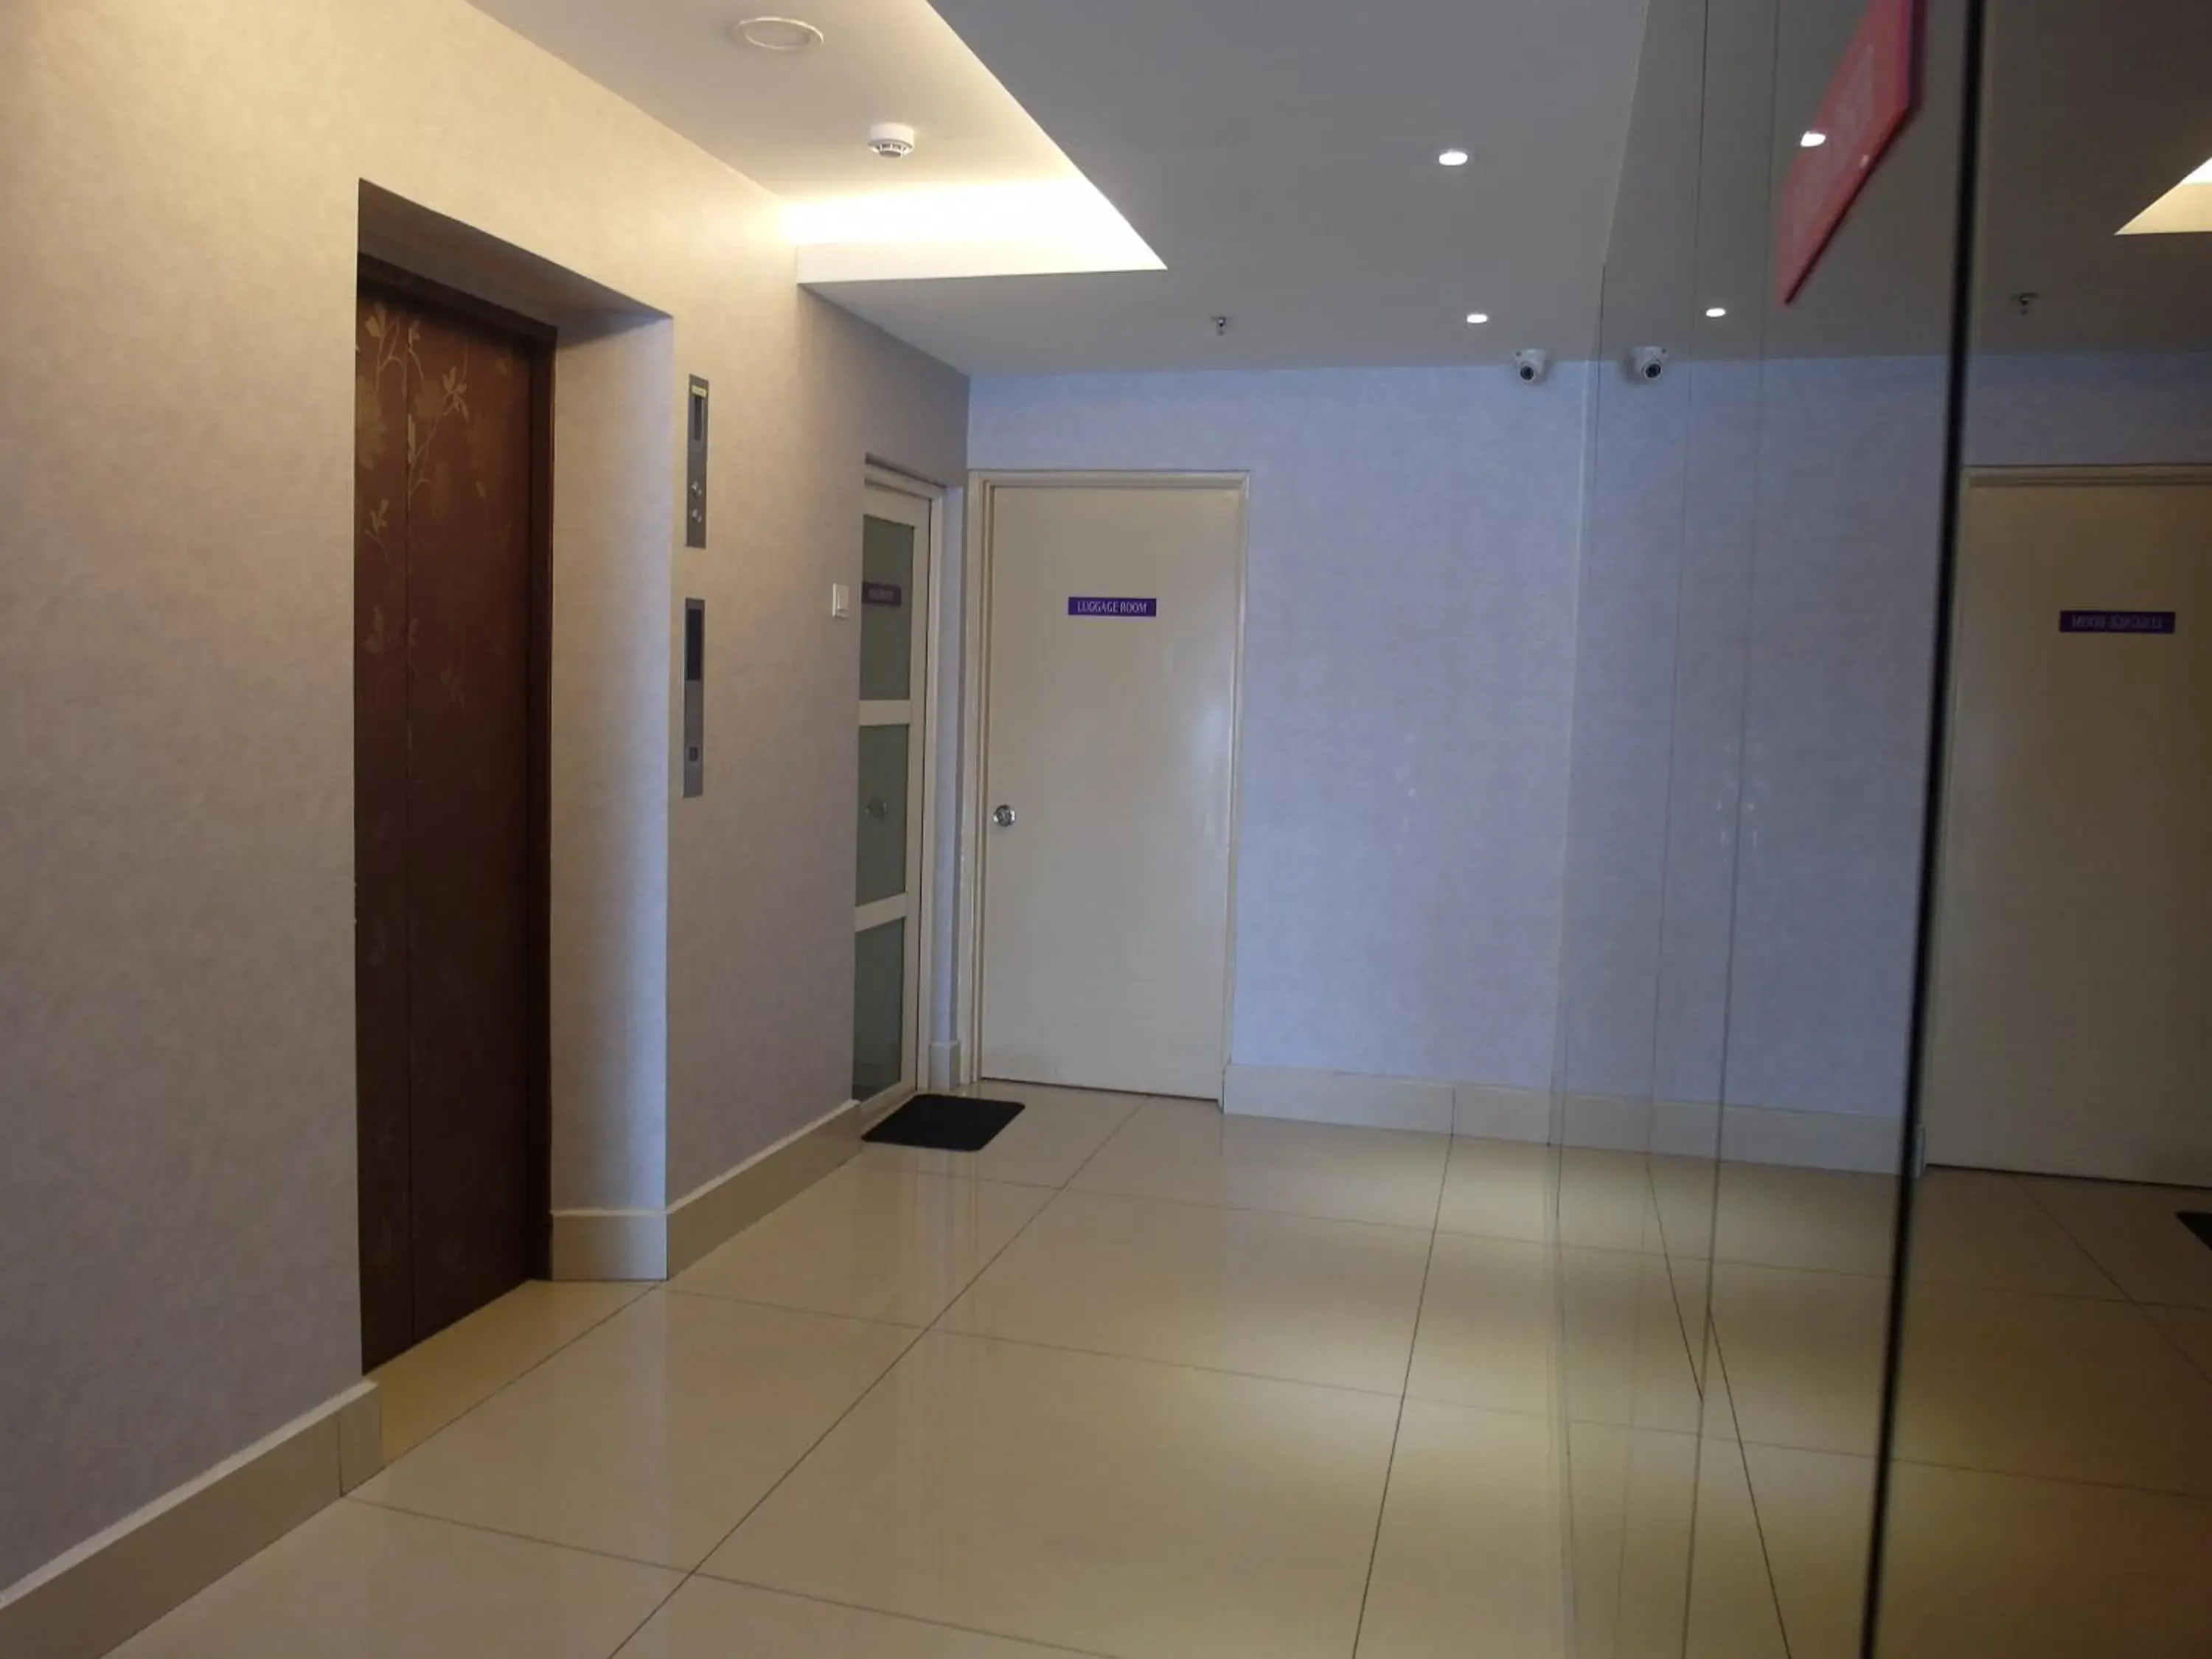 Lobby or reception in Metro Hotel @ KL Sentral